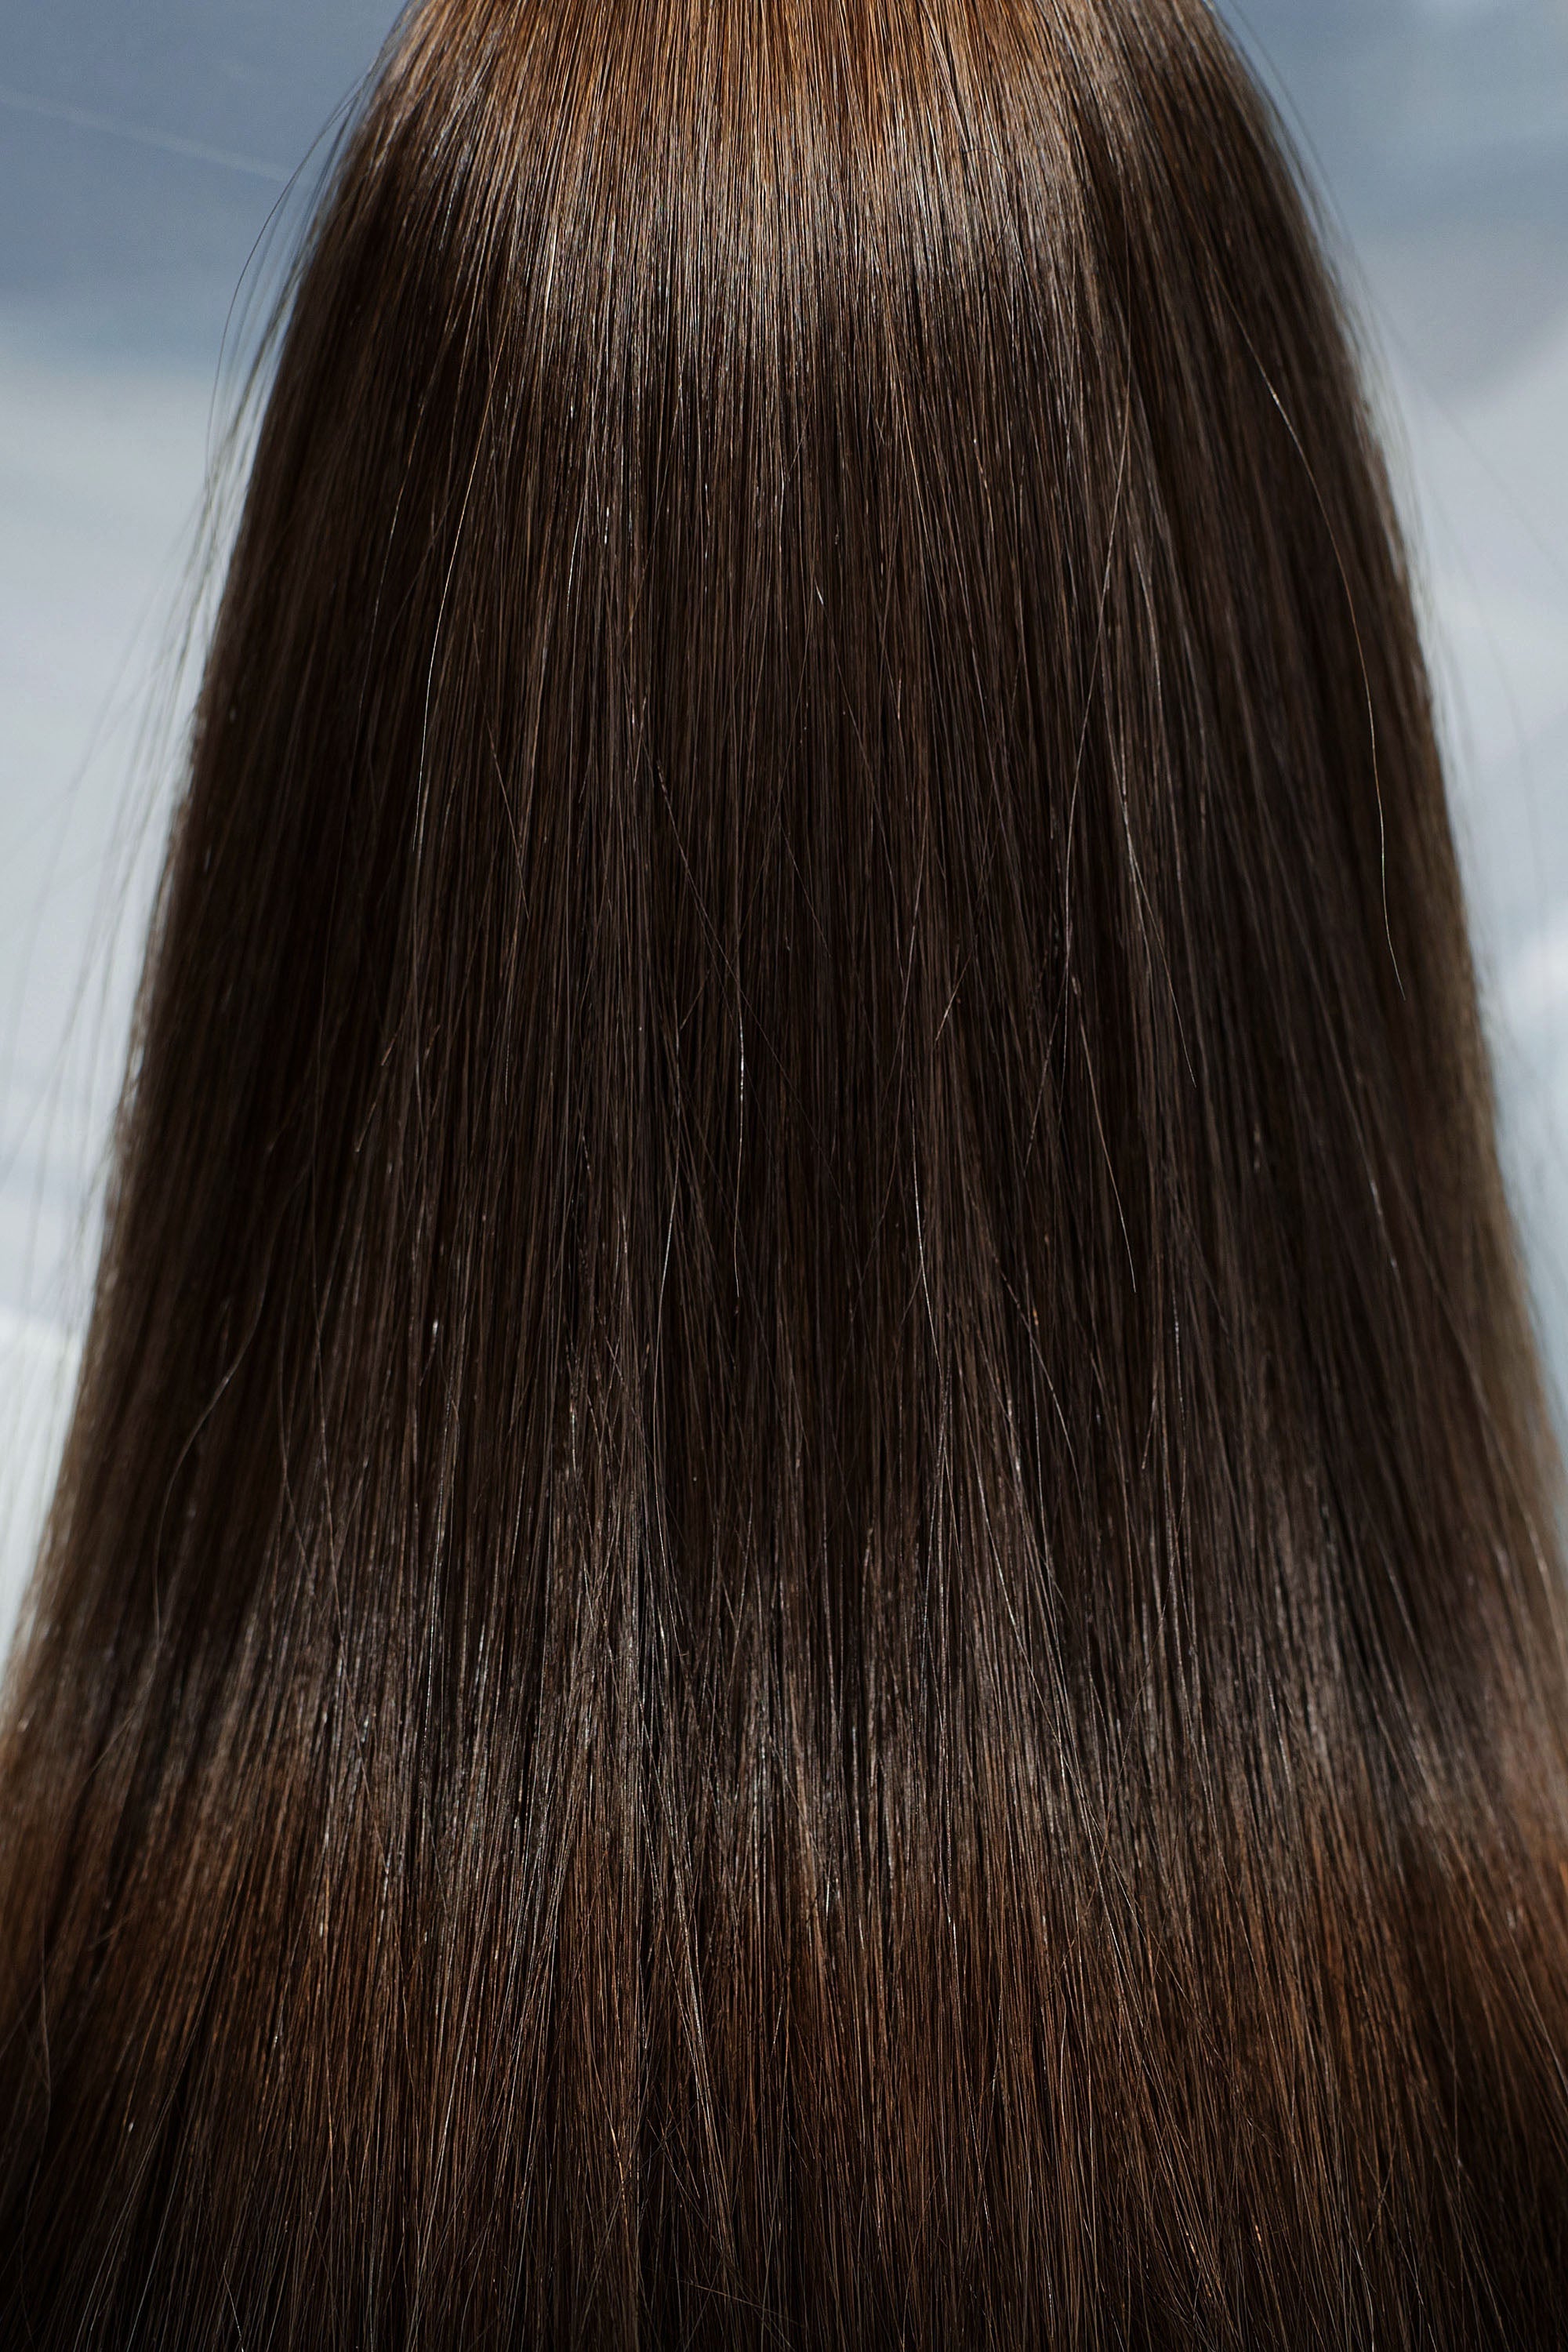 Behair professional Keratin Tip "Premium" 18" (45cm) Natural Straight Light Brown #4 - 25g (Standart - 0.7g each pcs) hair extensions